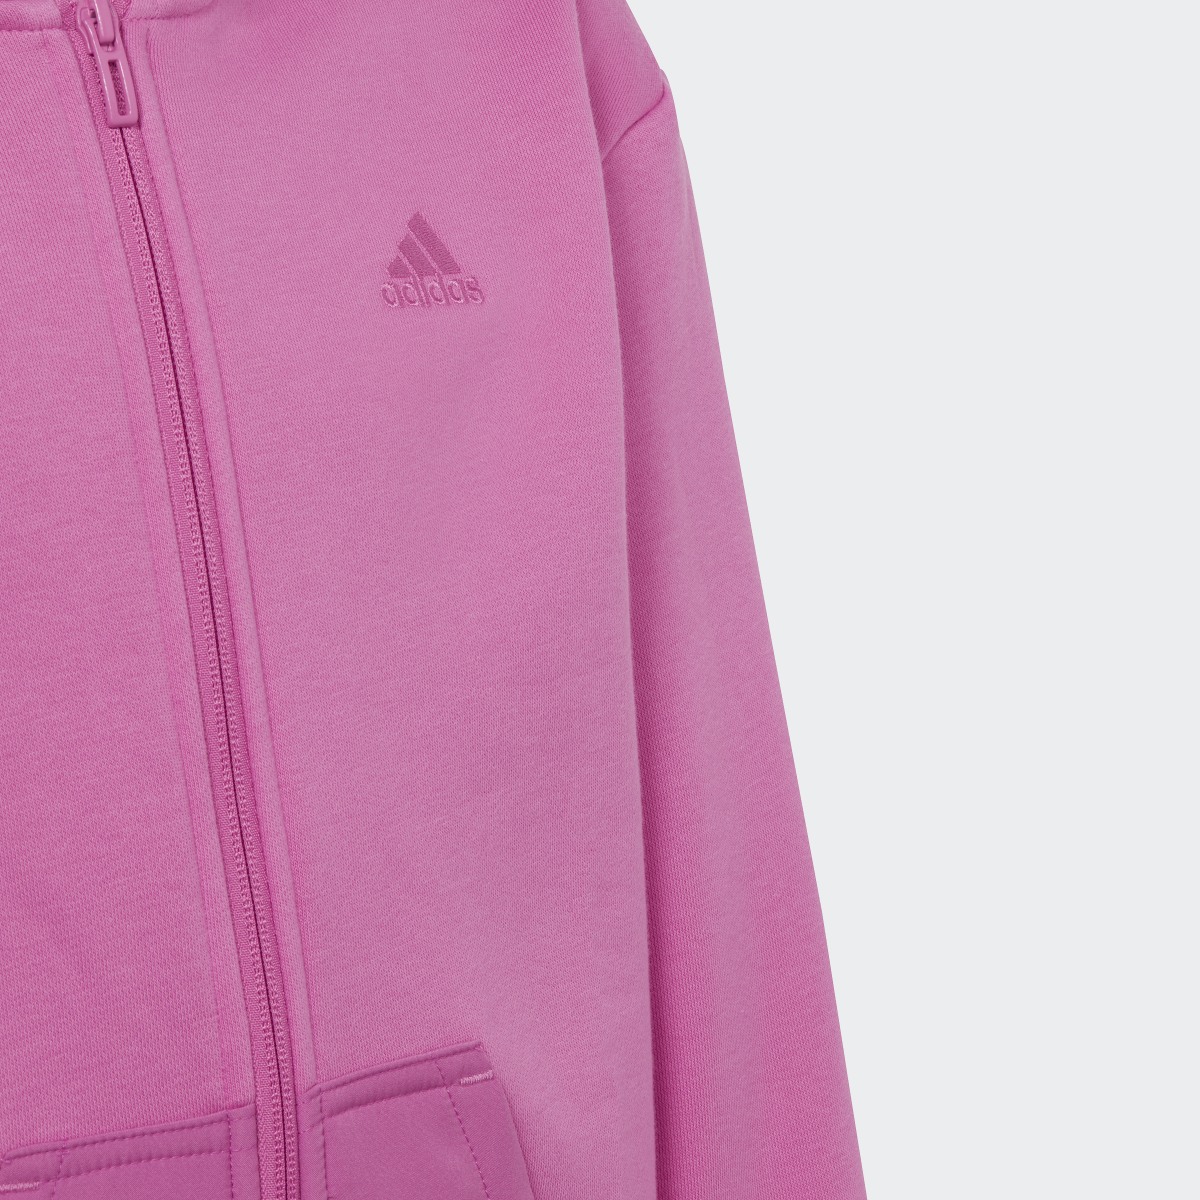 Adidas All SZN Fleece Full-Zip Track Top. 5